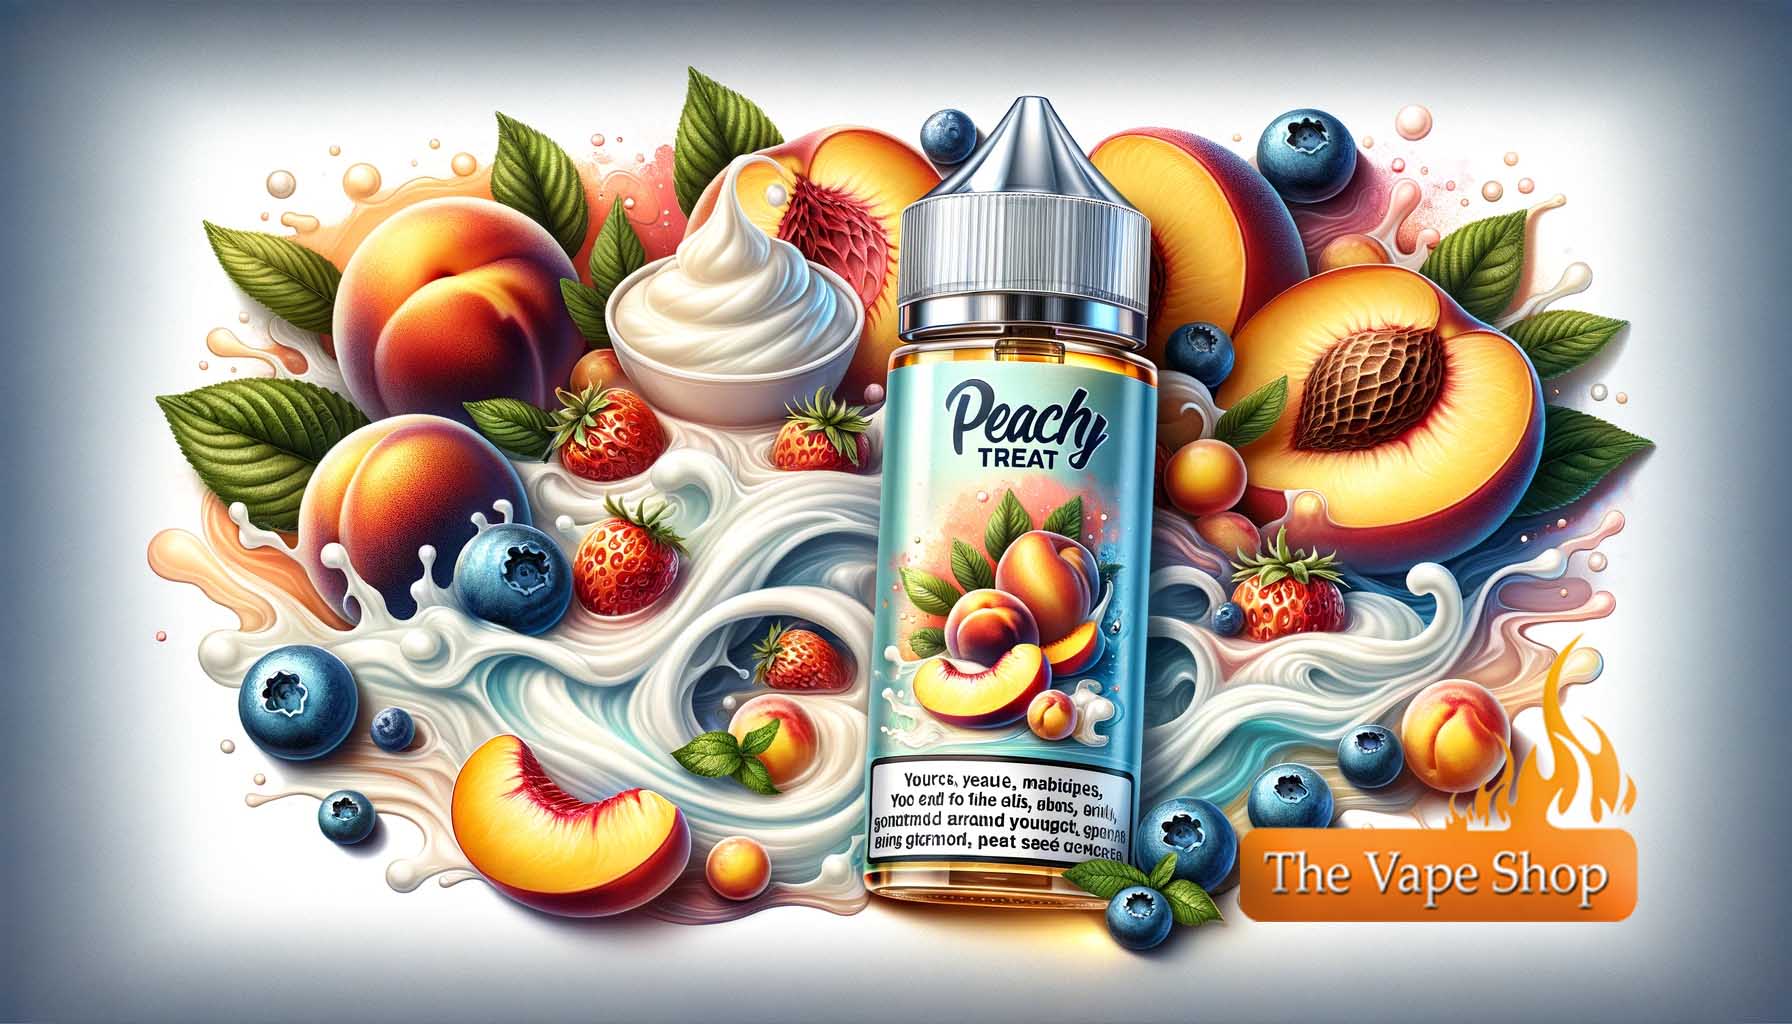 Peachy Treat E-Liquid Review: A Luscious Blend of Peach, Blueberry, and Yogurt